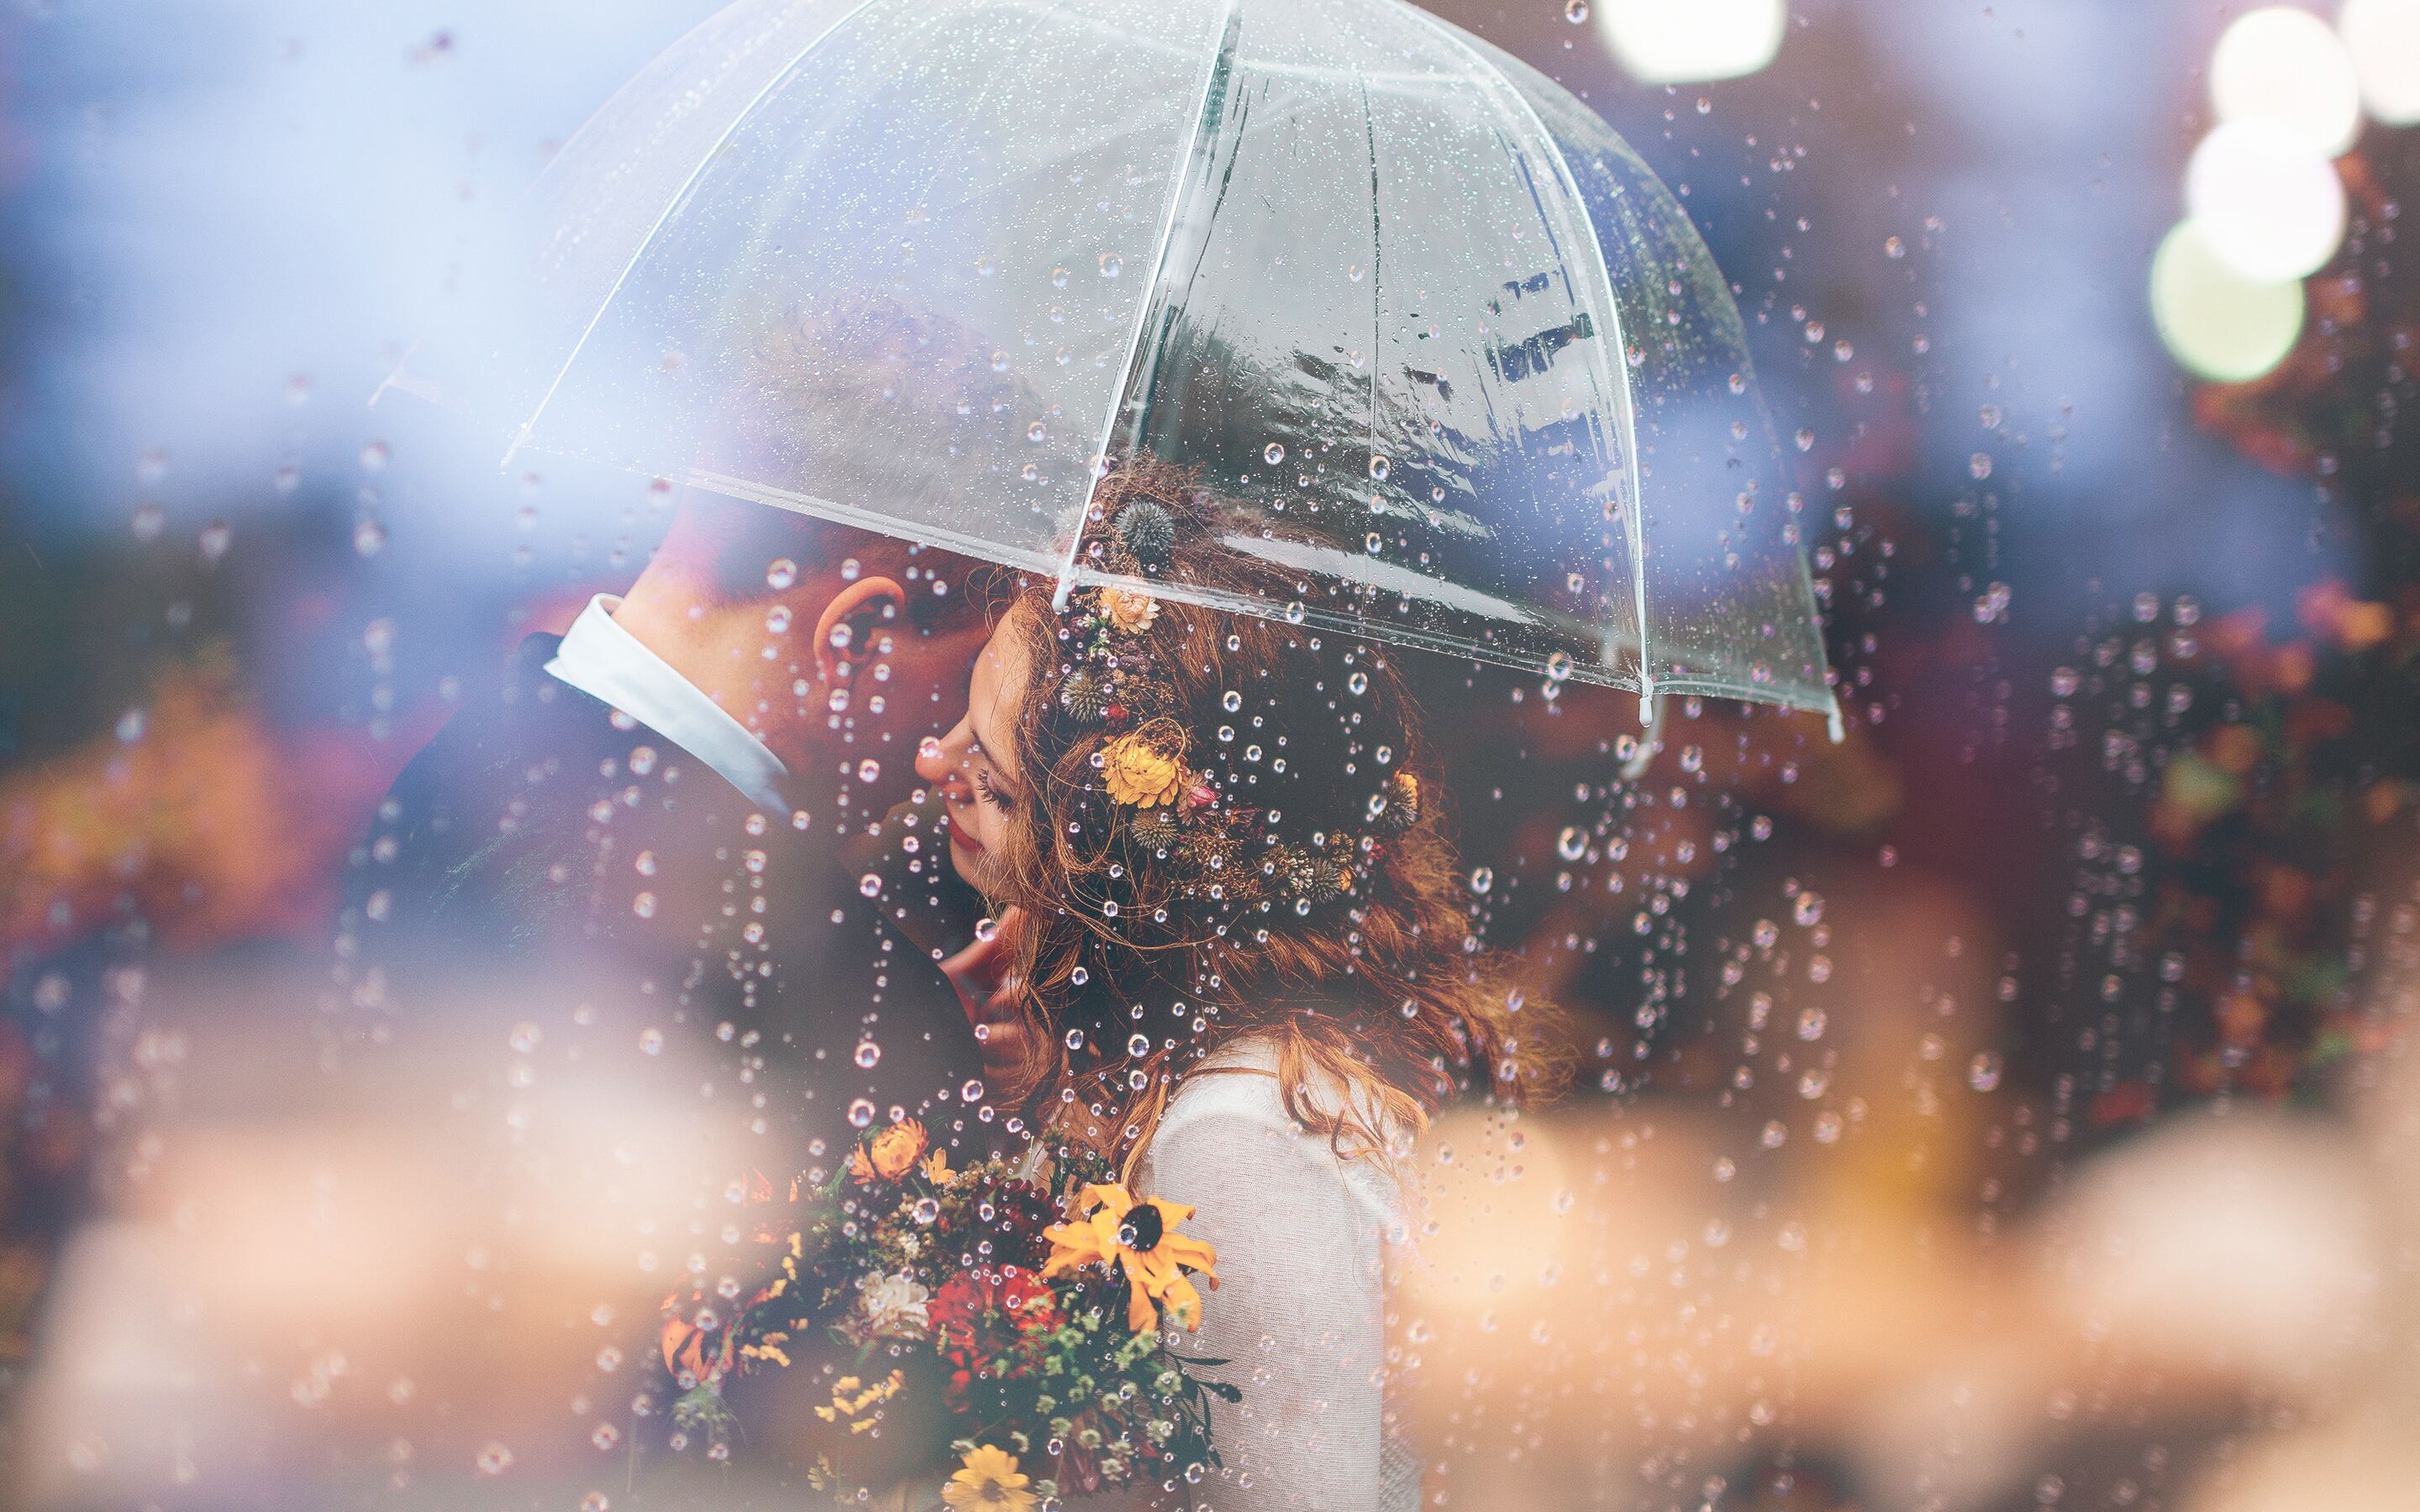 Married Couple Romantic Umbrella Raining Weeding Macbook Pro Retina HD 4k Wallpaper, Image, Background, Photo and Picture